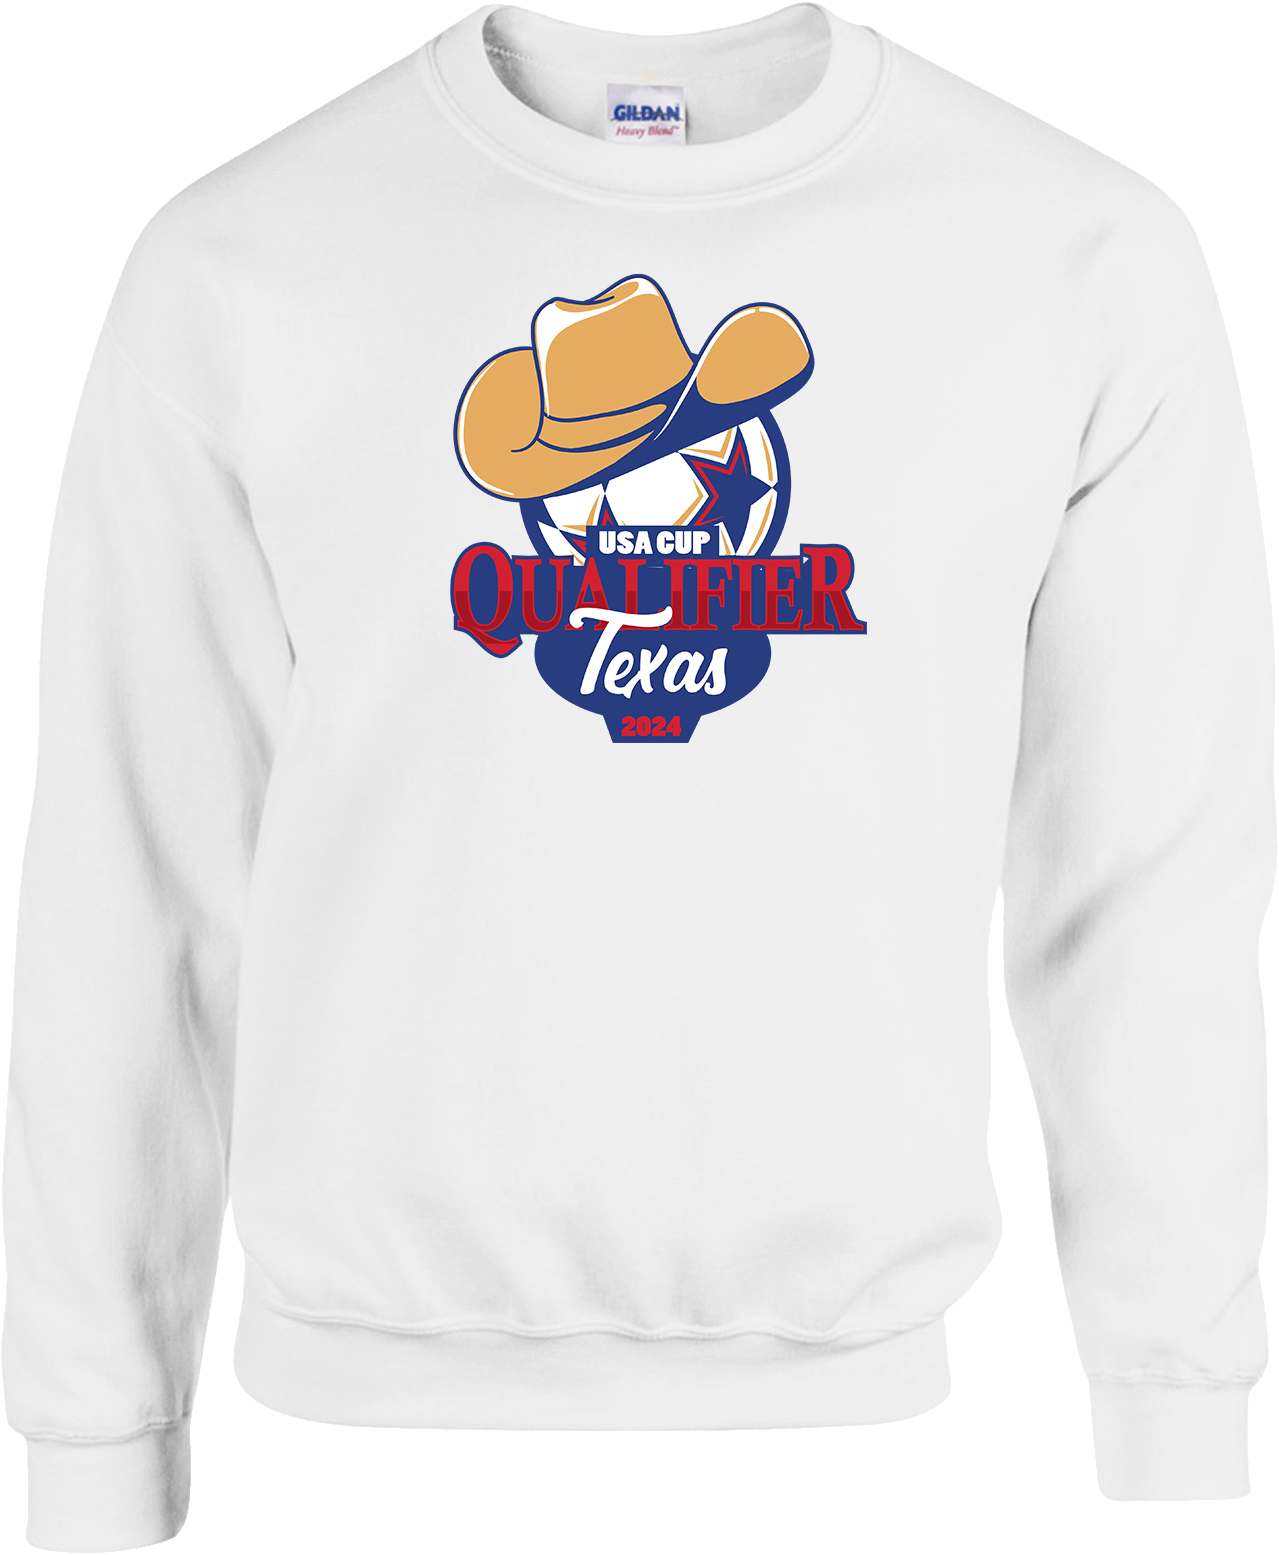 Crew Sweatershirt - 2024 USA CUP Qualifier Texas